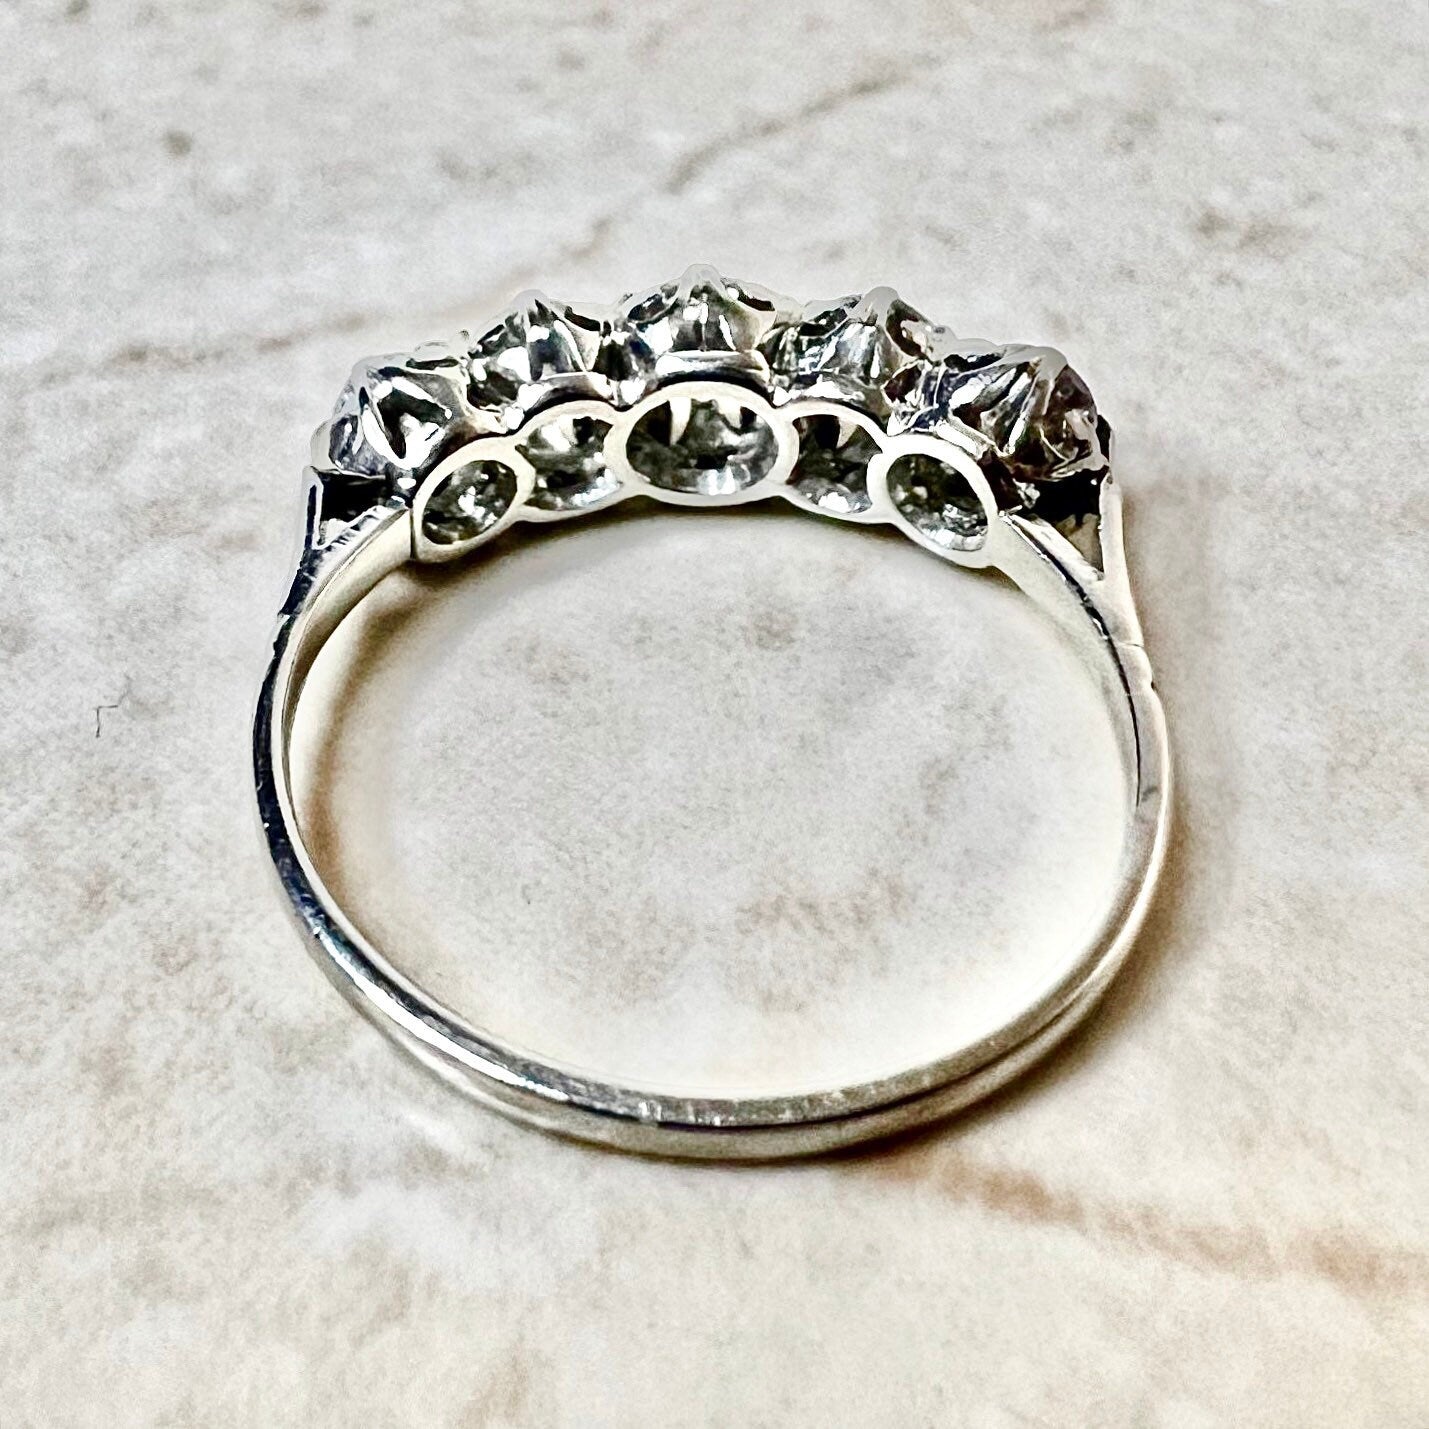 1 CT Vintage Platinum Diamond Band Ring - Platinum 5 Stone Ring - Diamond Ring - Anniversary Ring - Wedding Ring - Best Gifts For Her